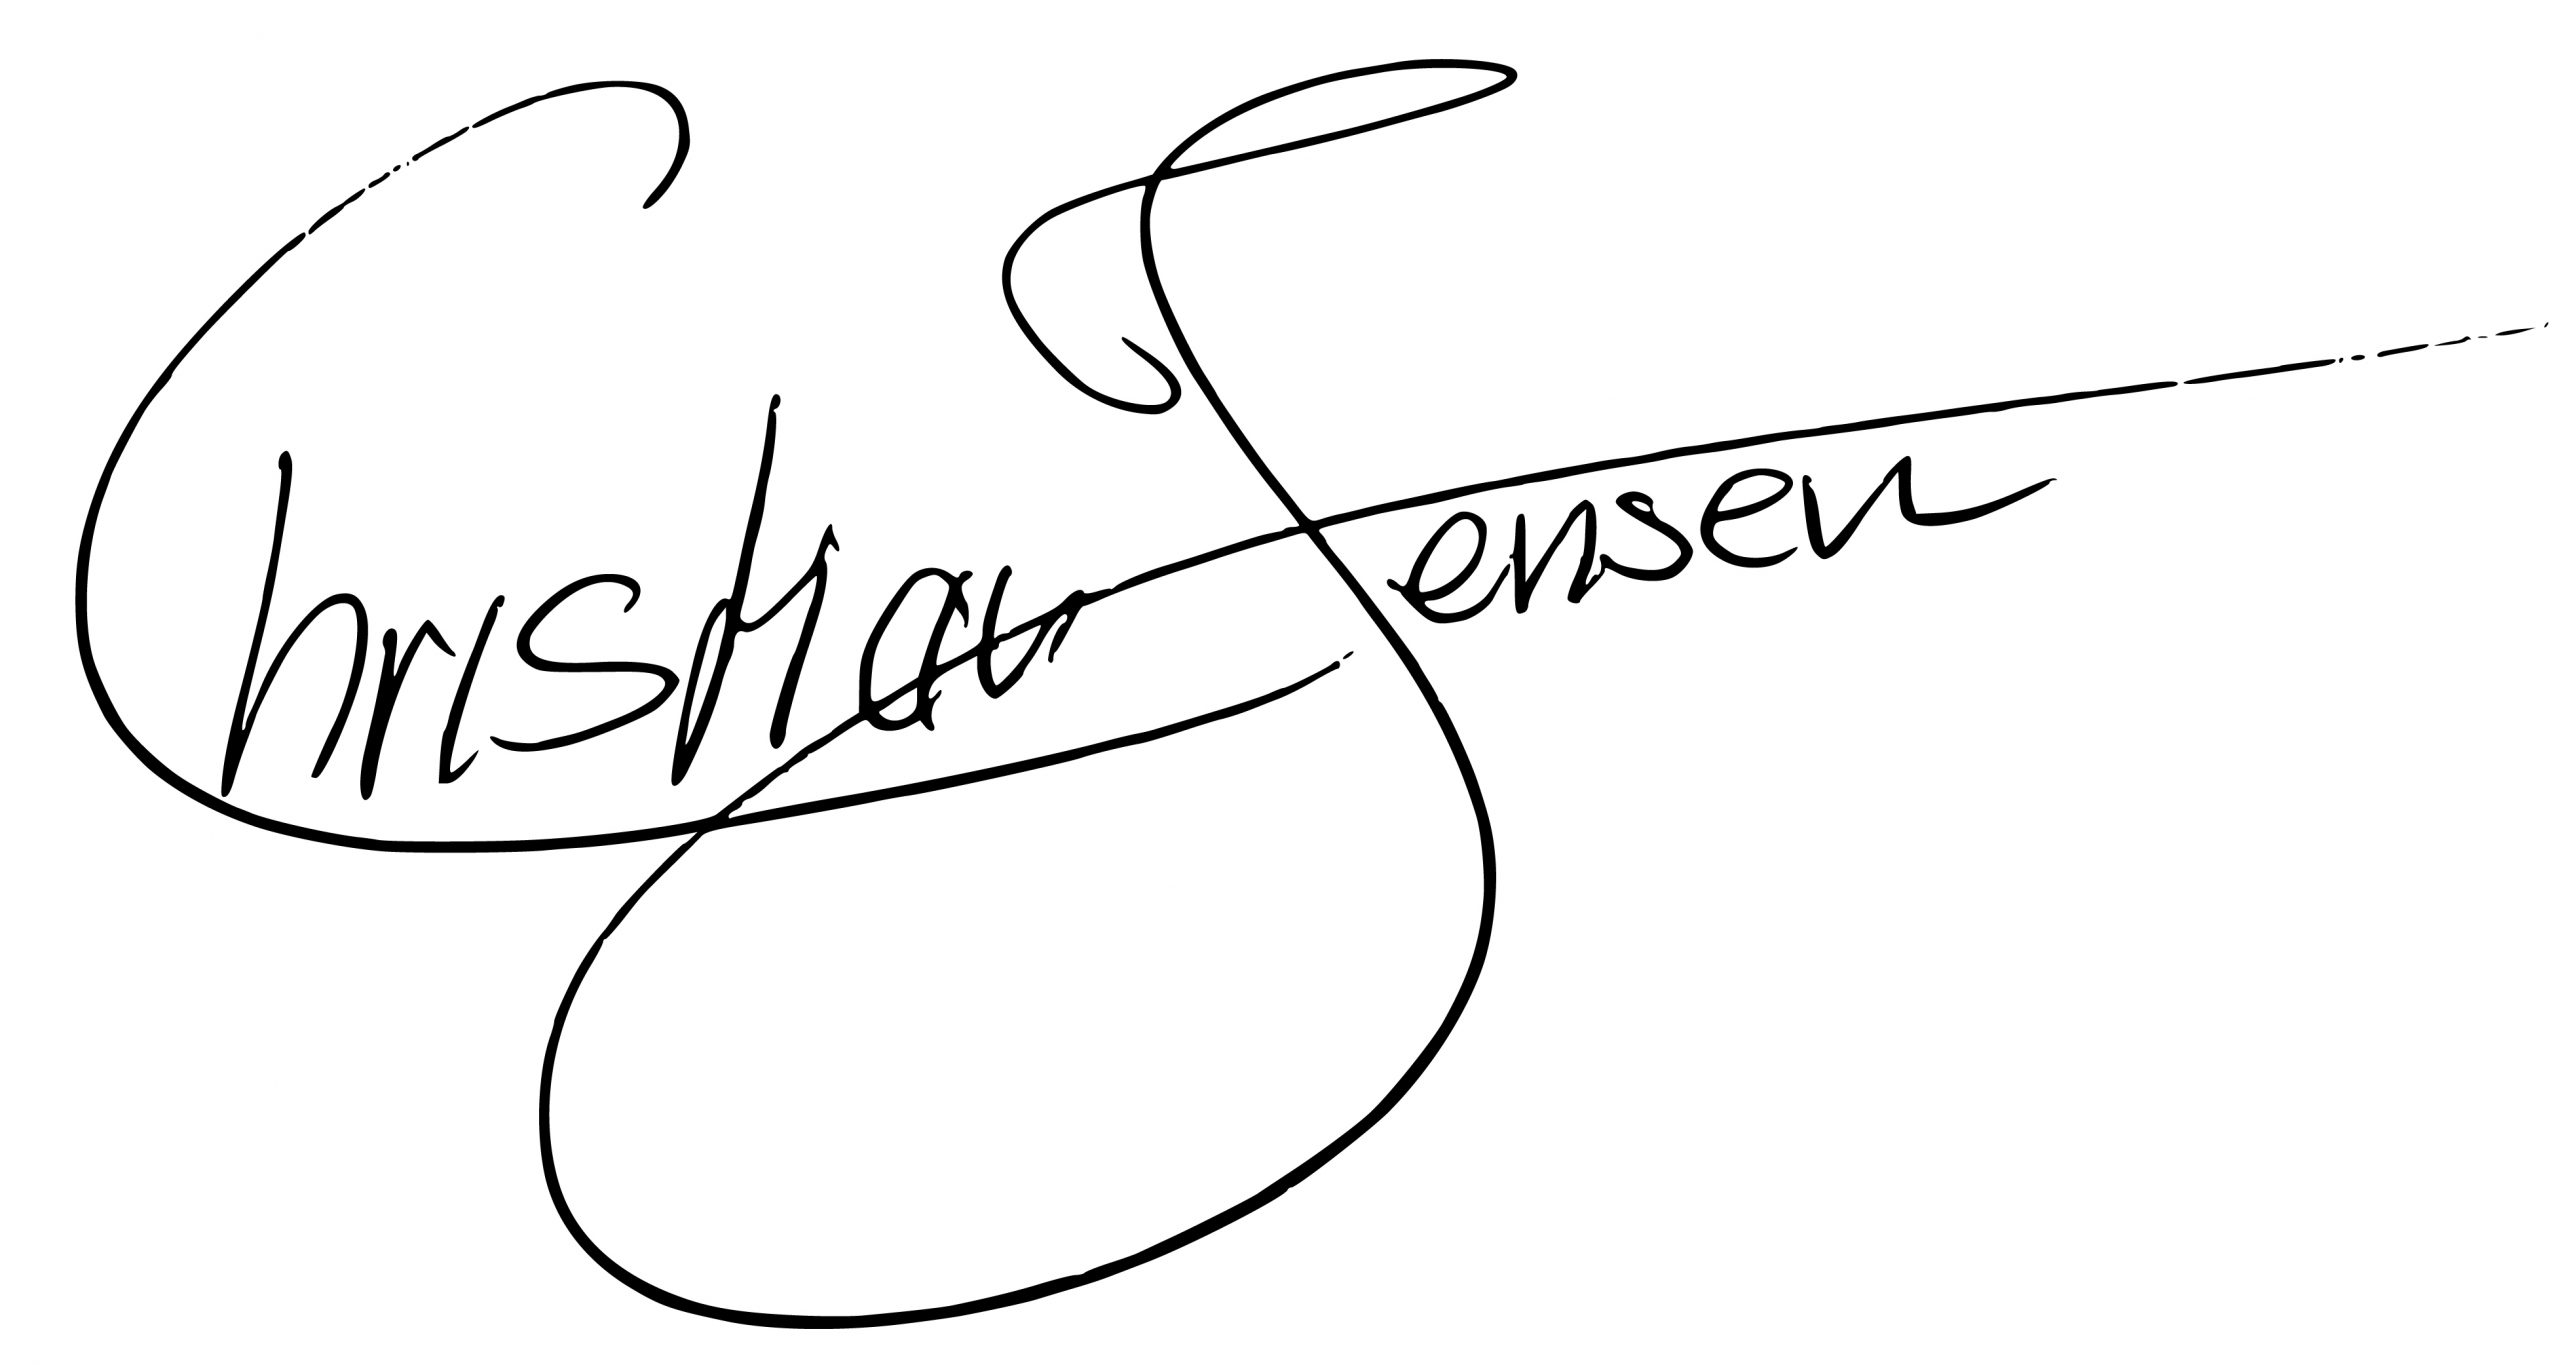 Make your own signature – ChristianJensen.no